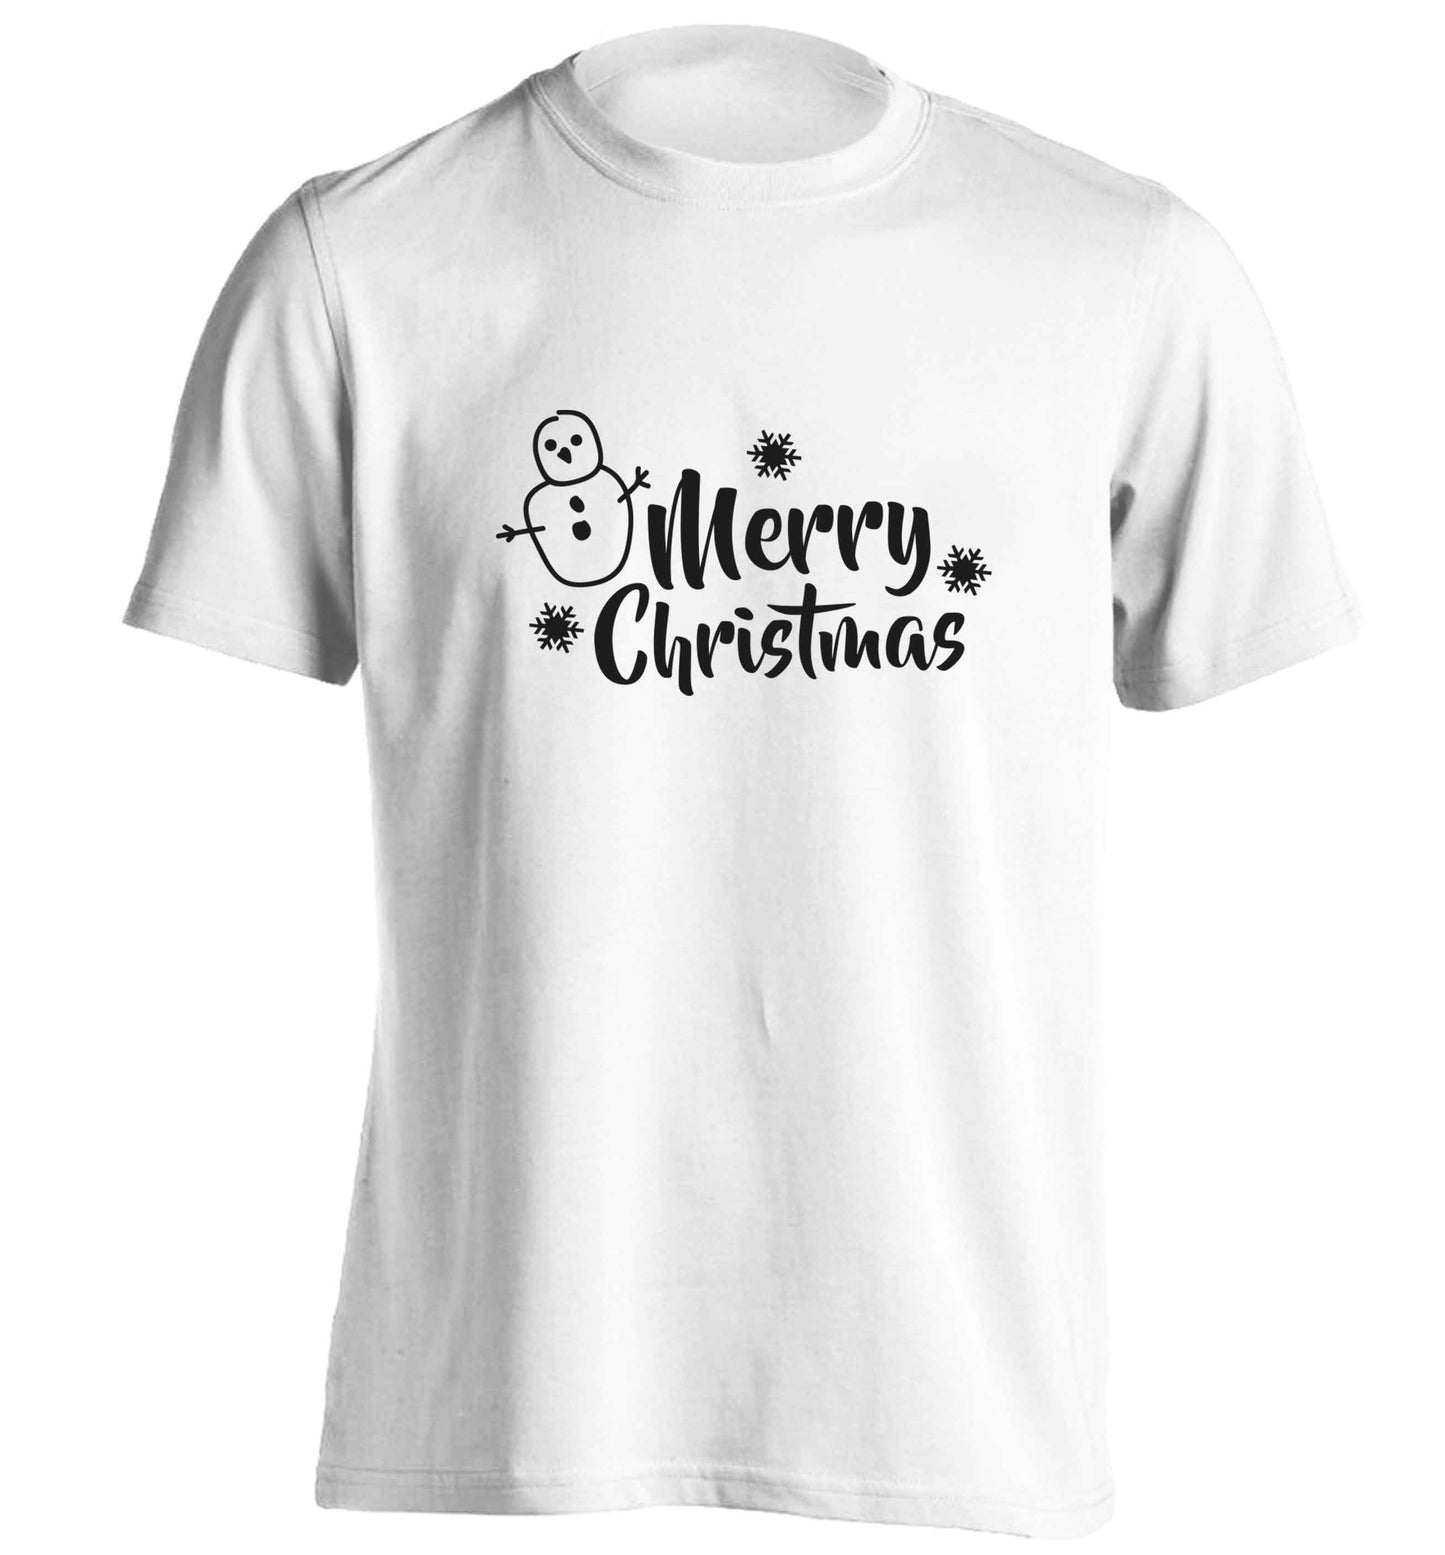 Merry Christmas - snowman adults unisex white Tshirt 2XL